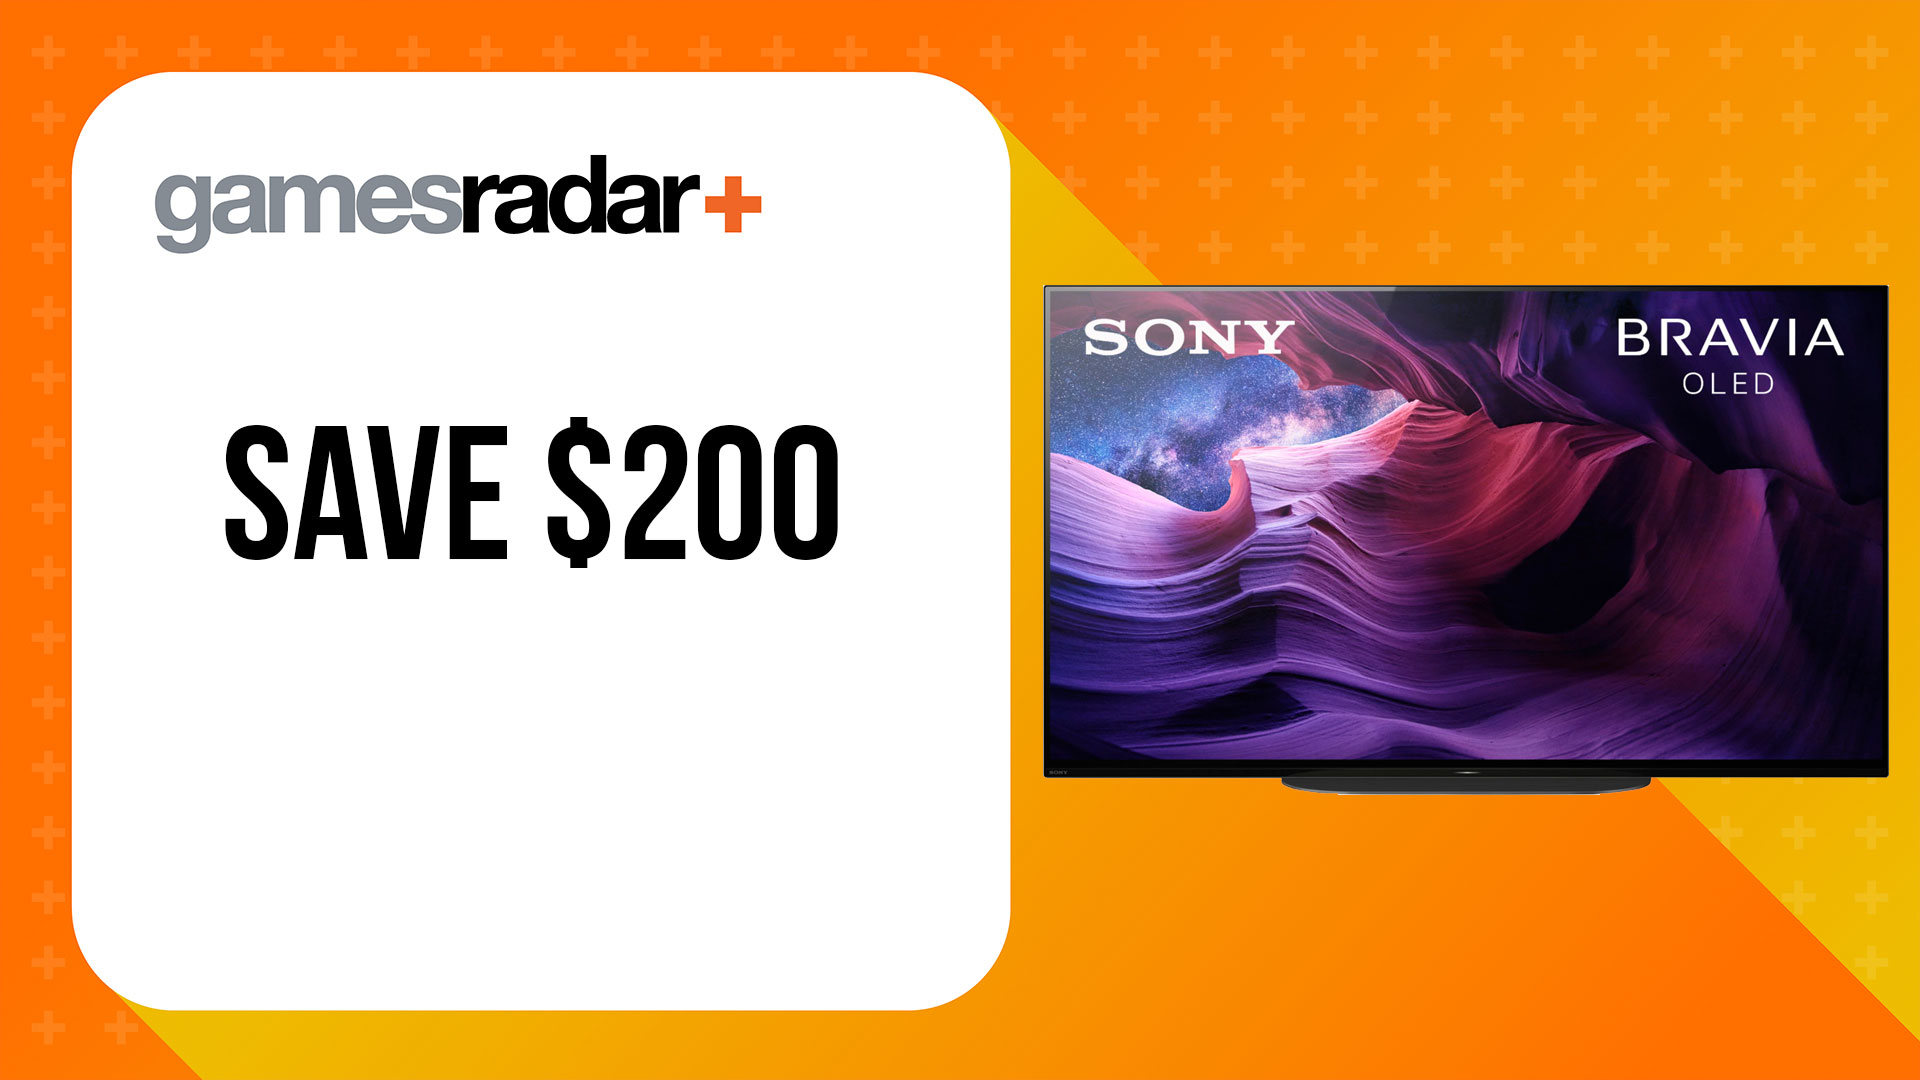 Sony Bravia A9S deal - save $200